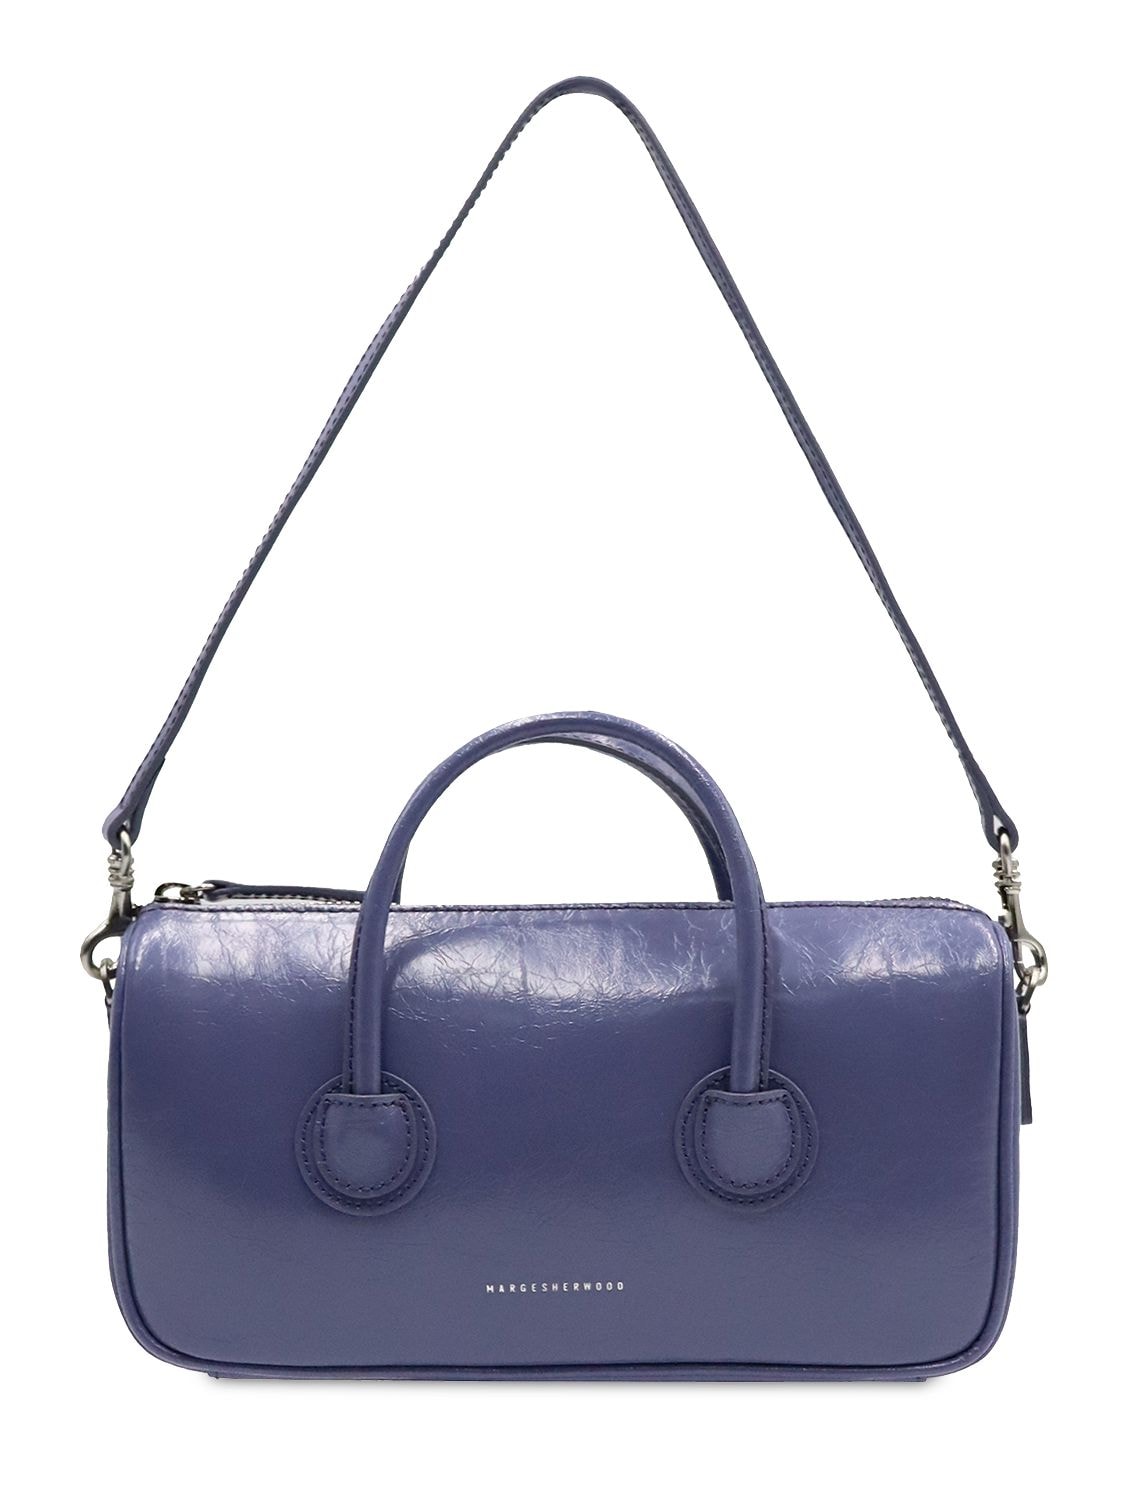 Marge Sherwood Zipper S Top Handle Bag In Purple Heather